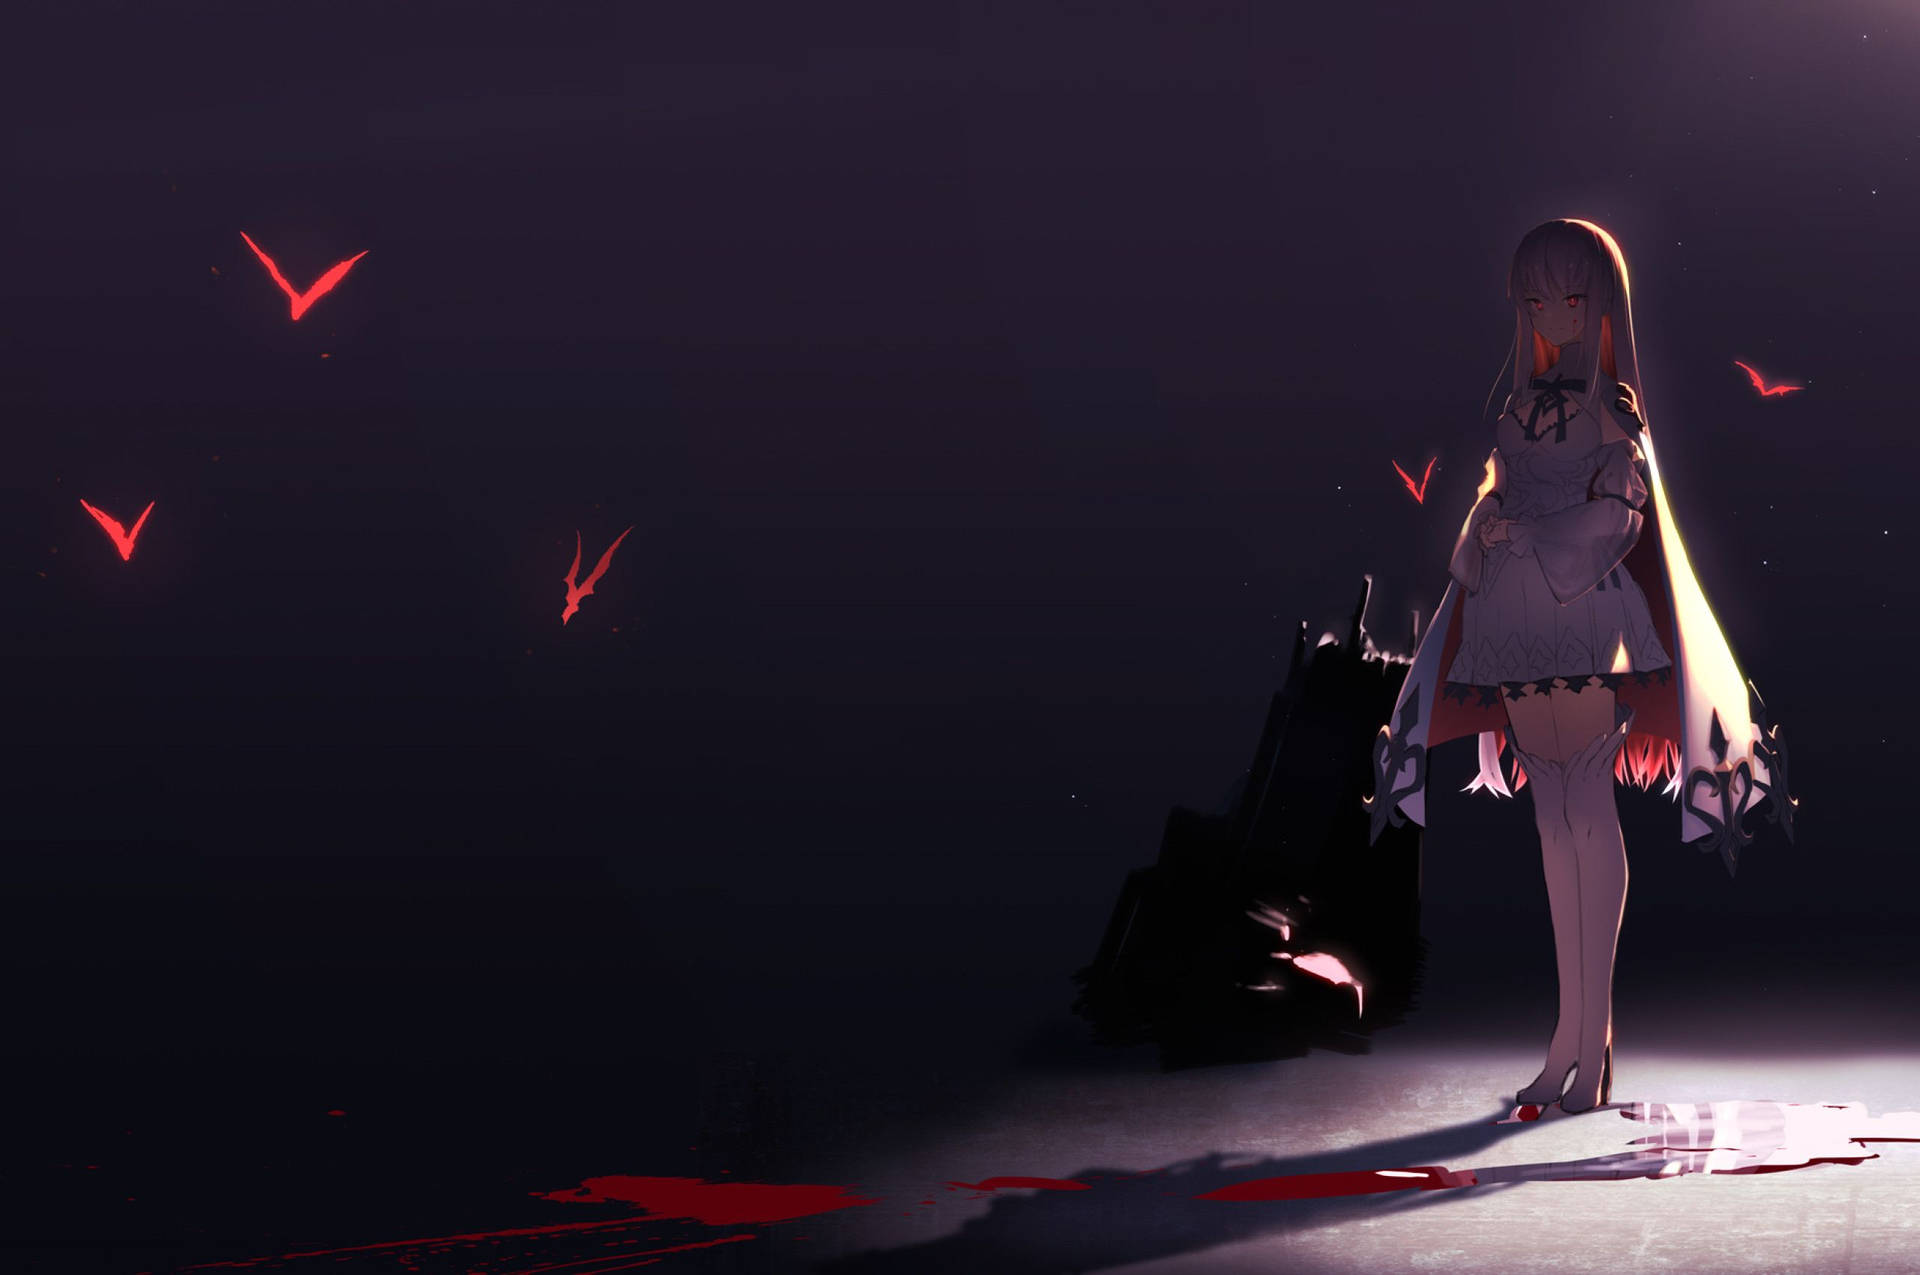 Anime Vampire Demon Background